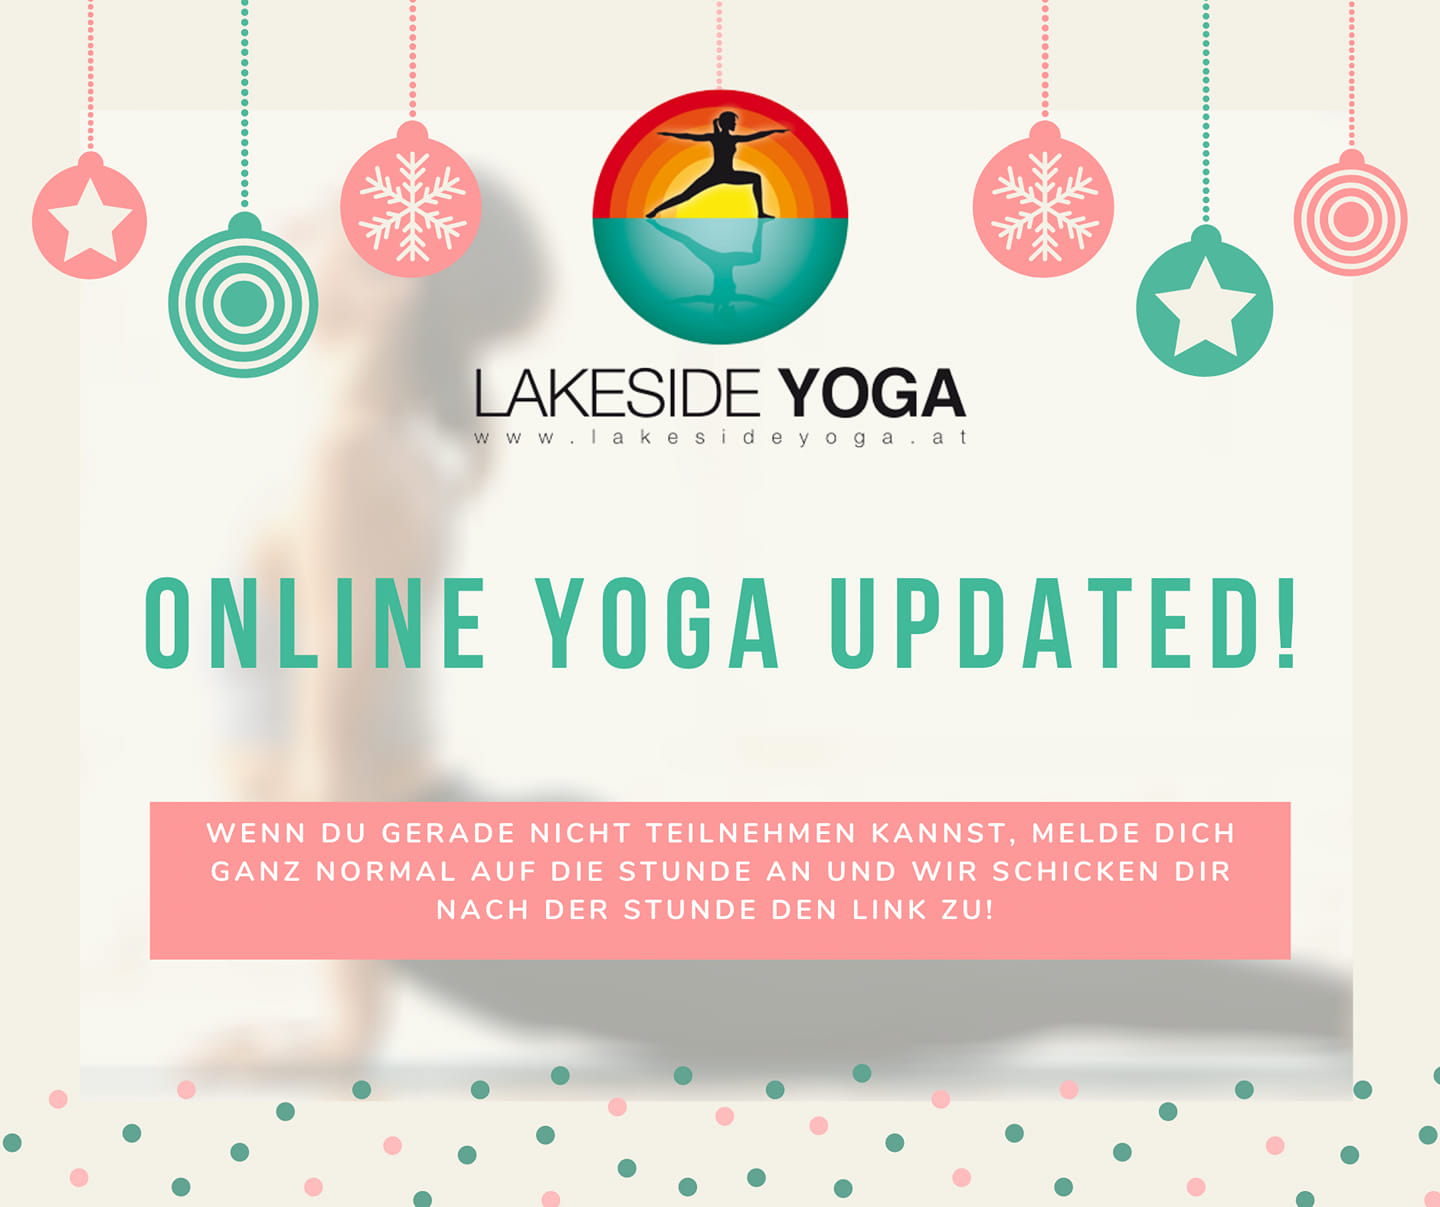 Online Yoga updated !